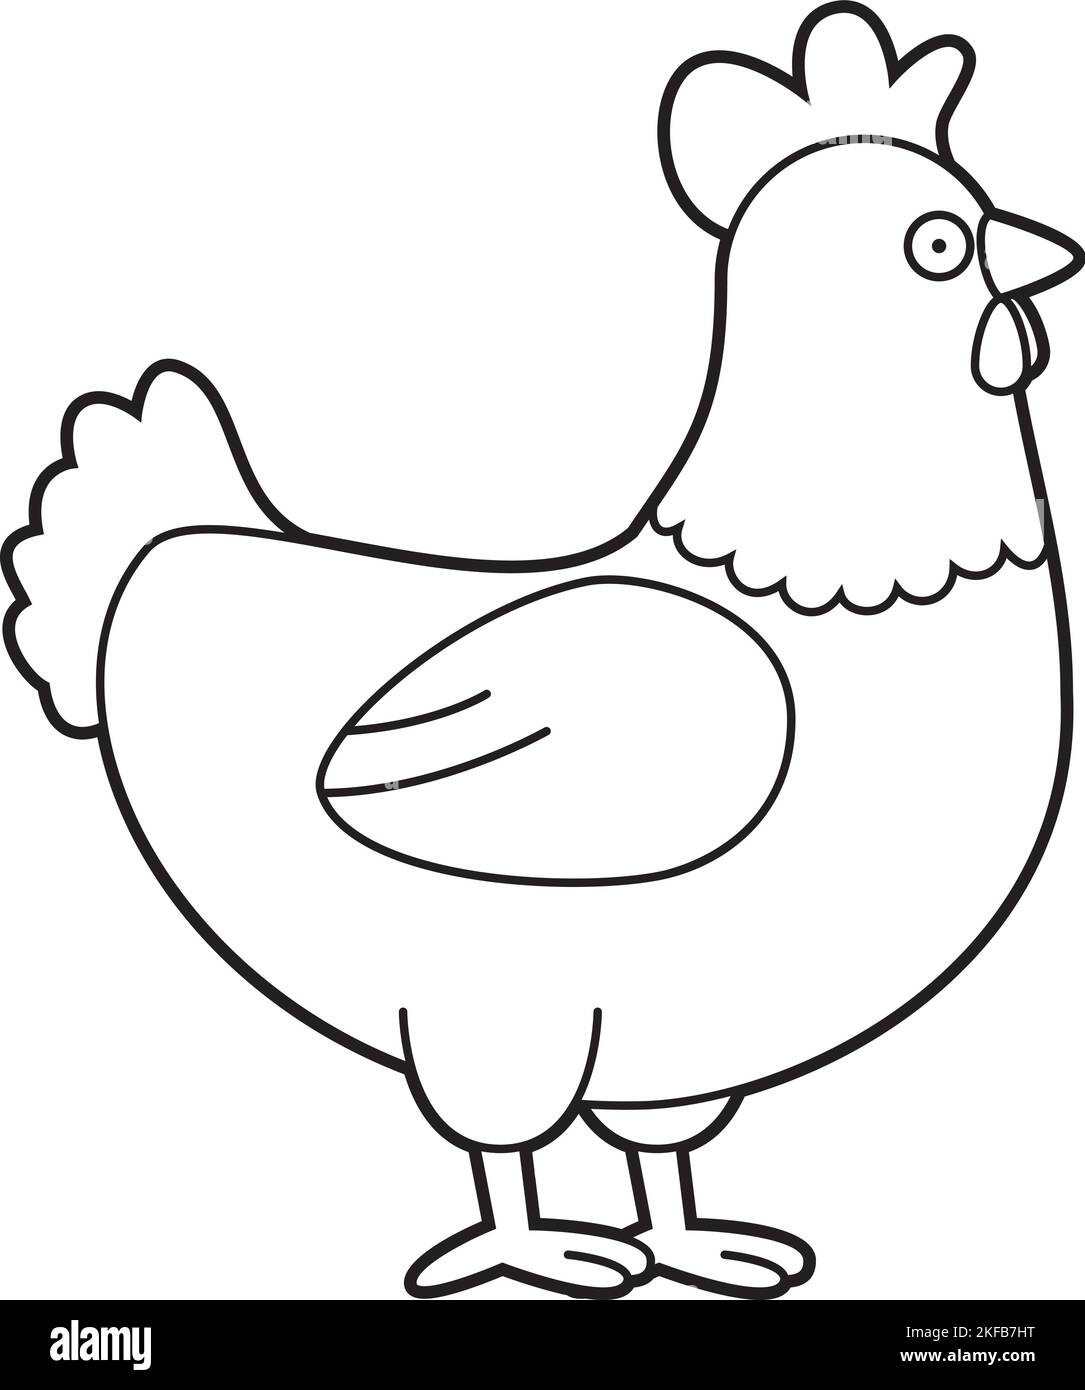 Einfache Färbung Cartoon Vektor Illustration eines Hühnchens Stock Vektor